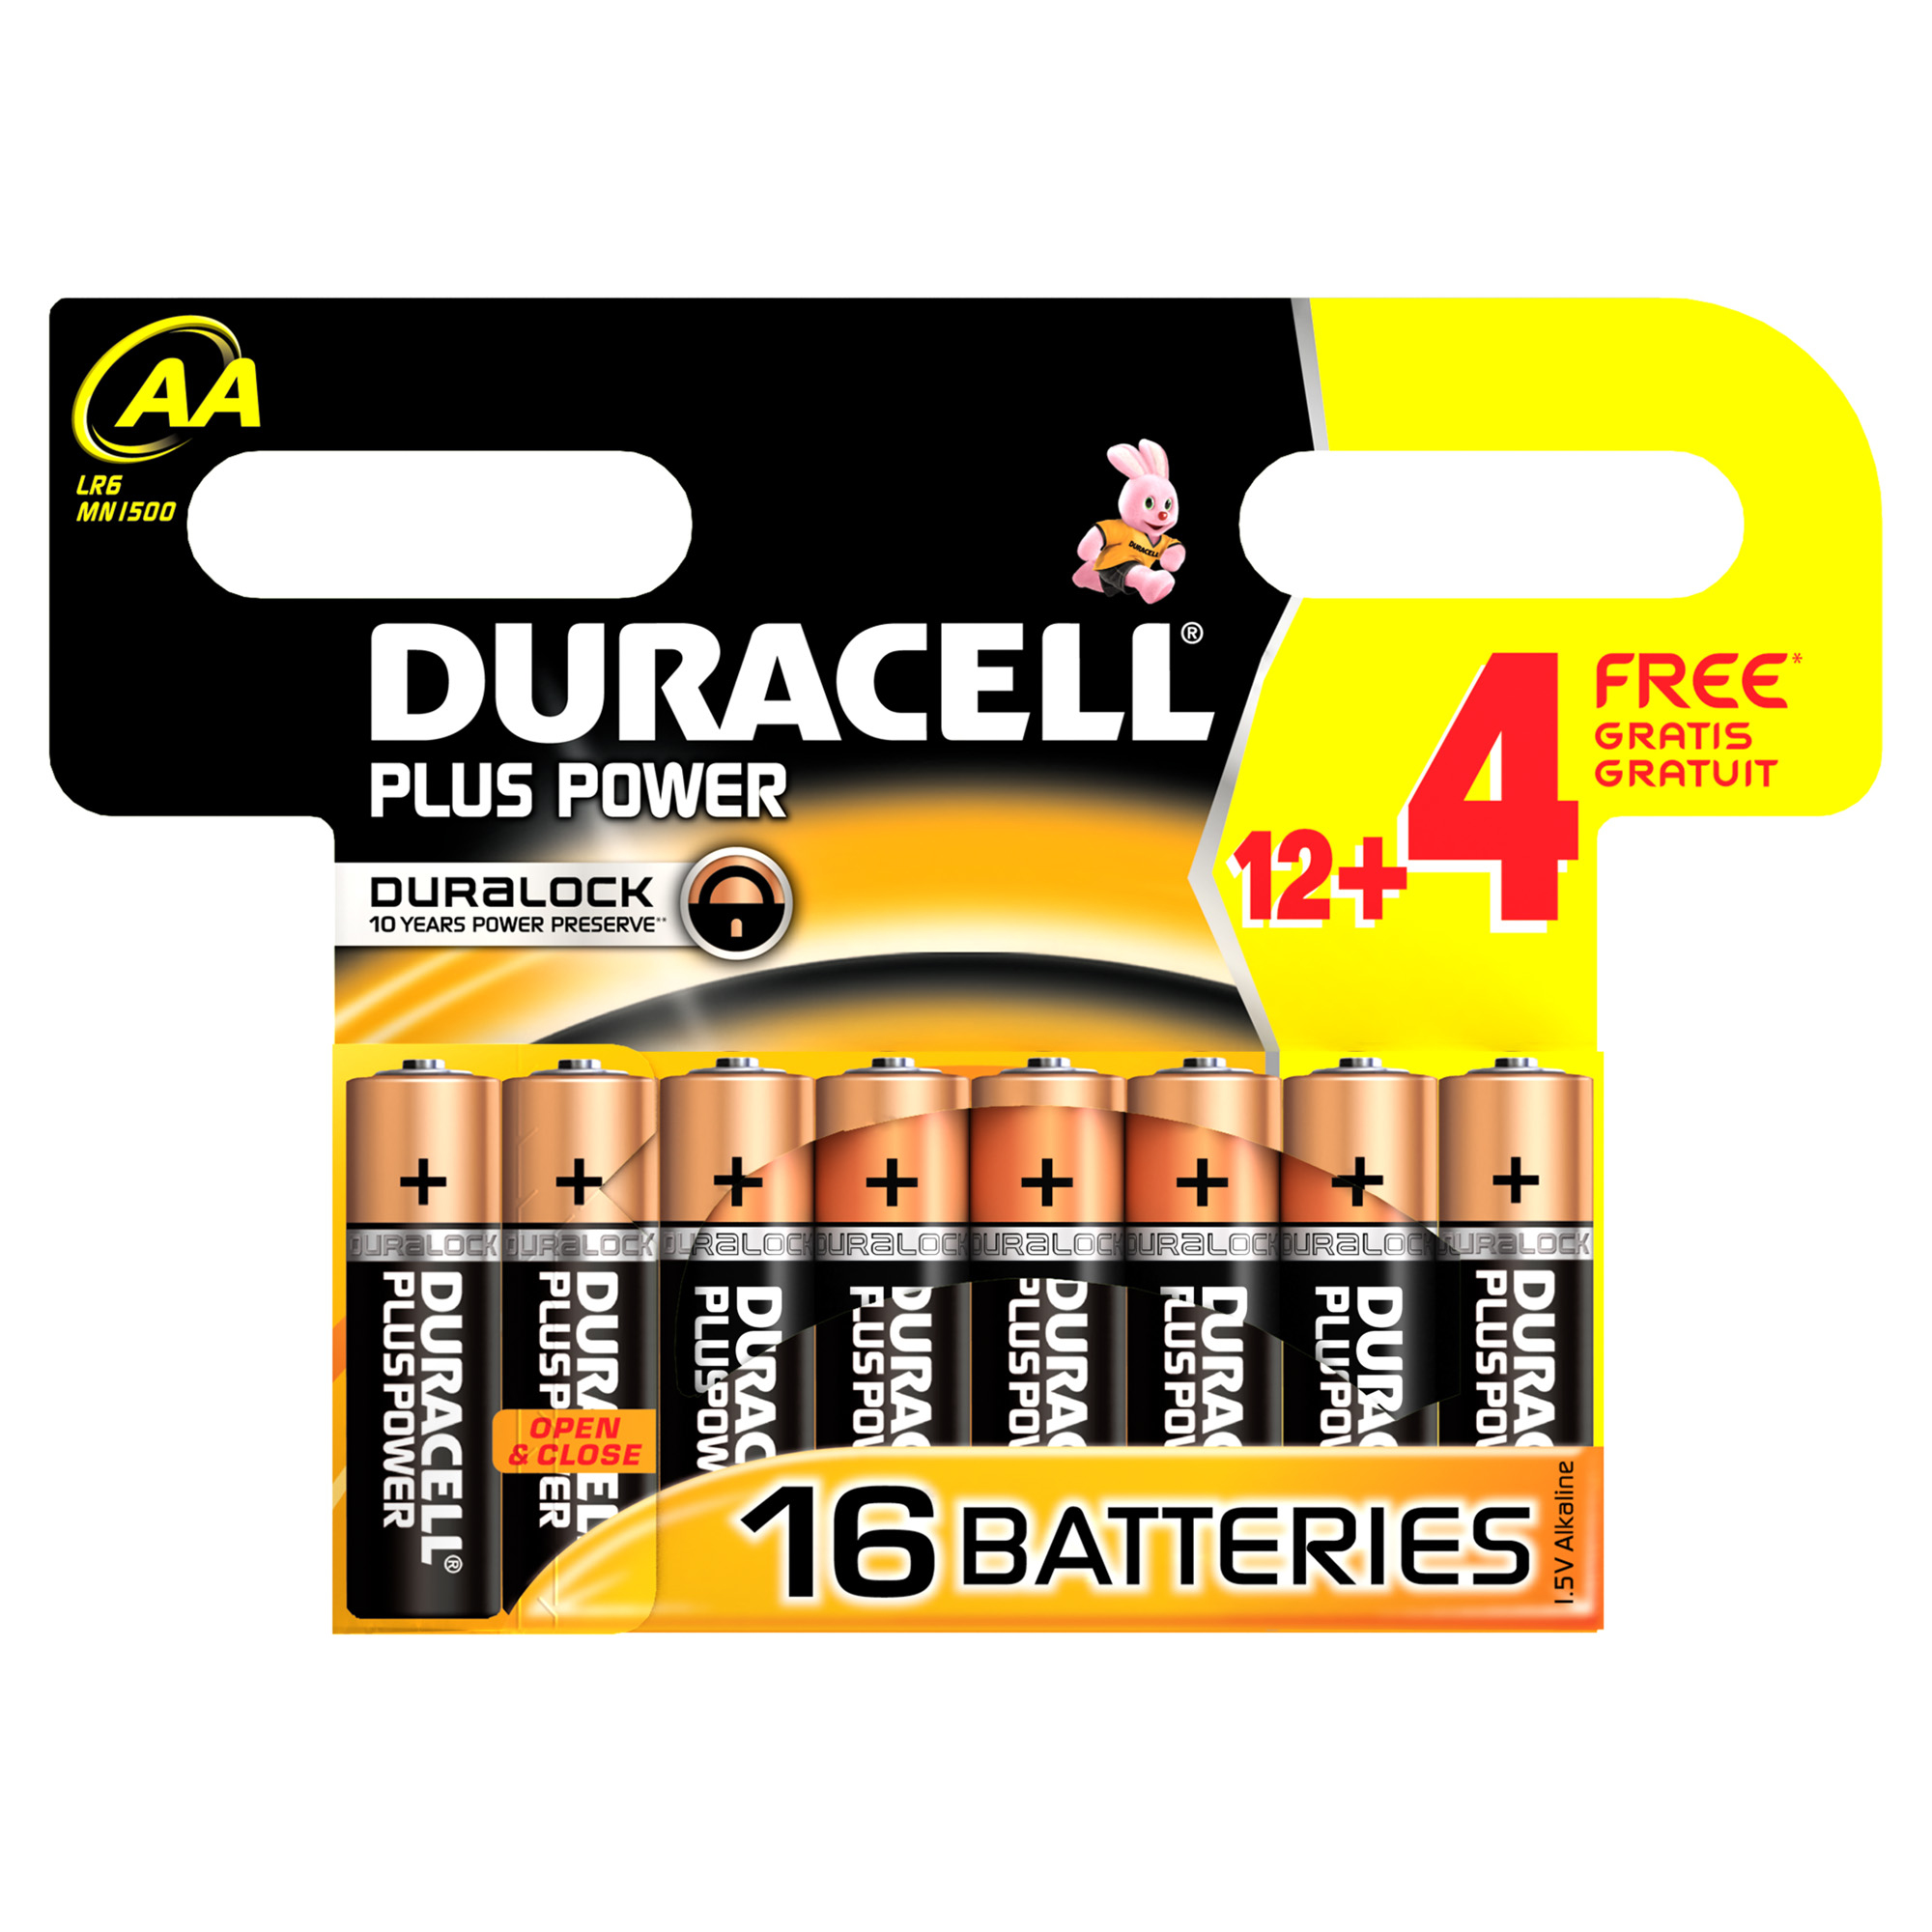 best aa batteries 2017 duracell vs energizer